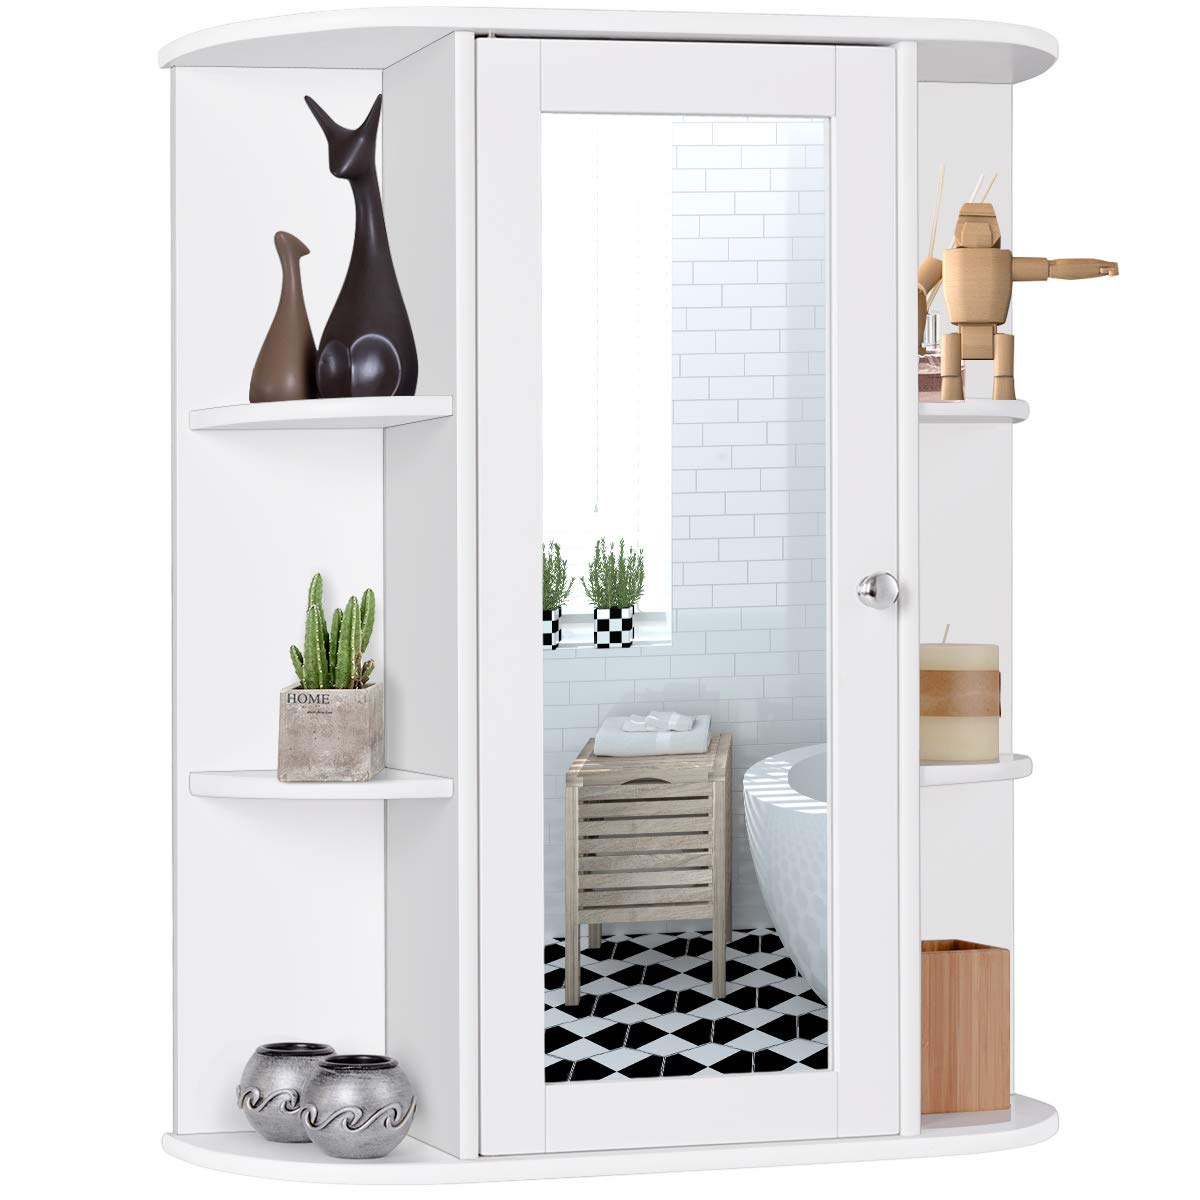 Wall Mount Bathroom Cabinet Wooden Medicine Cabinet Storage Organizer  Double Door with 2 Shelves, and Open Display Shelf